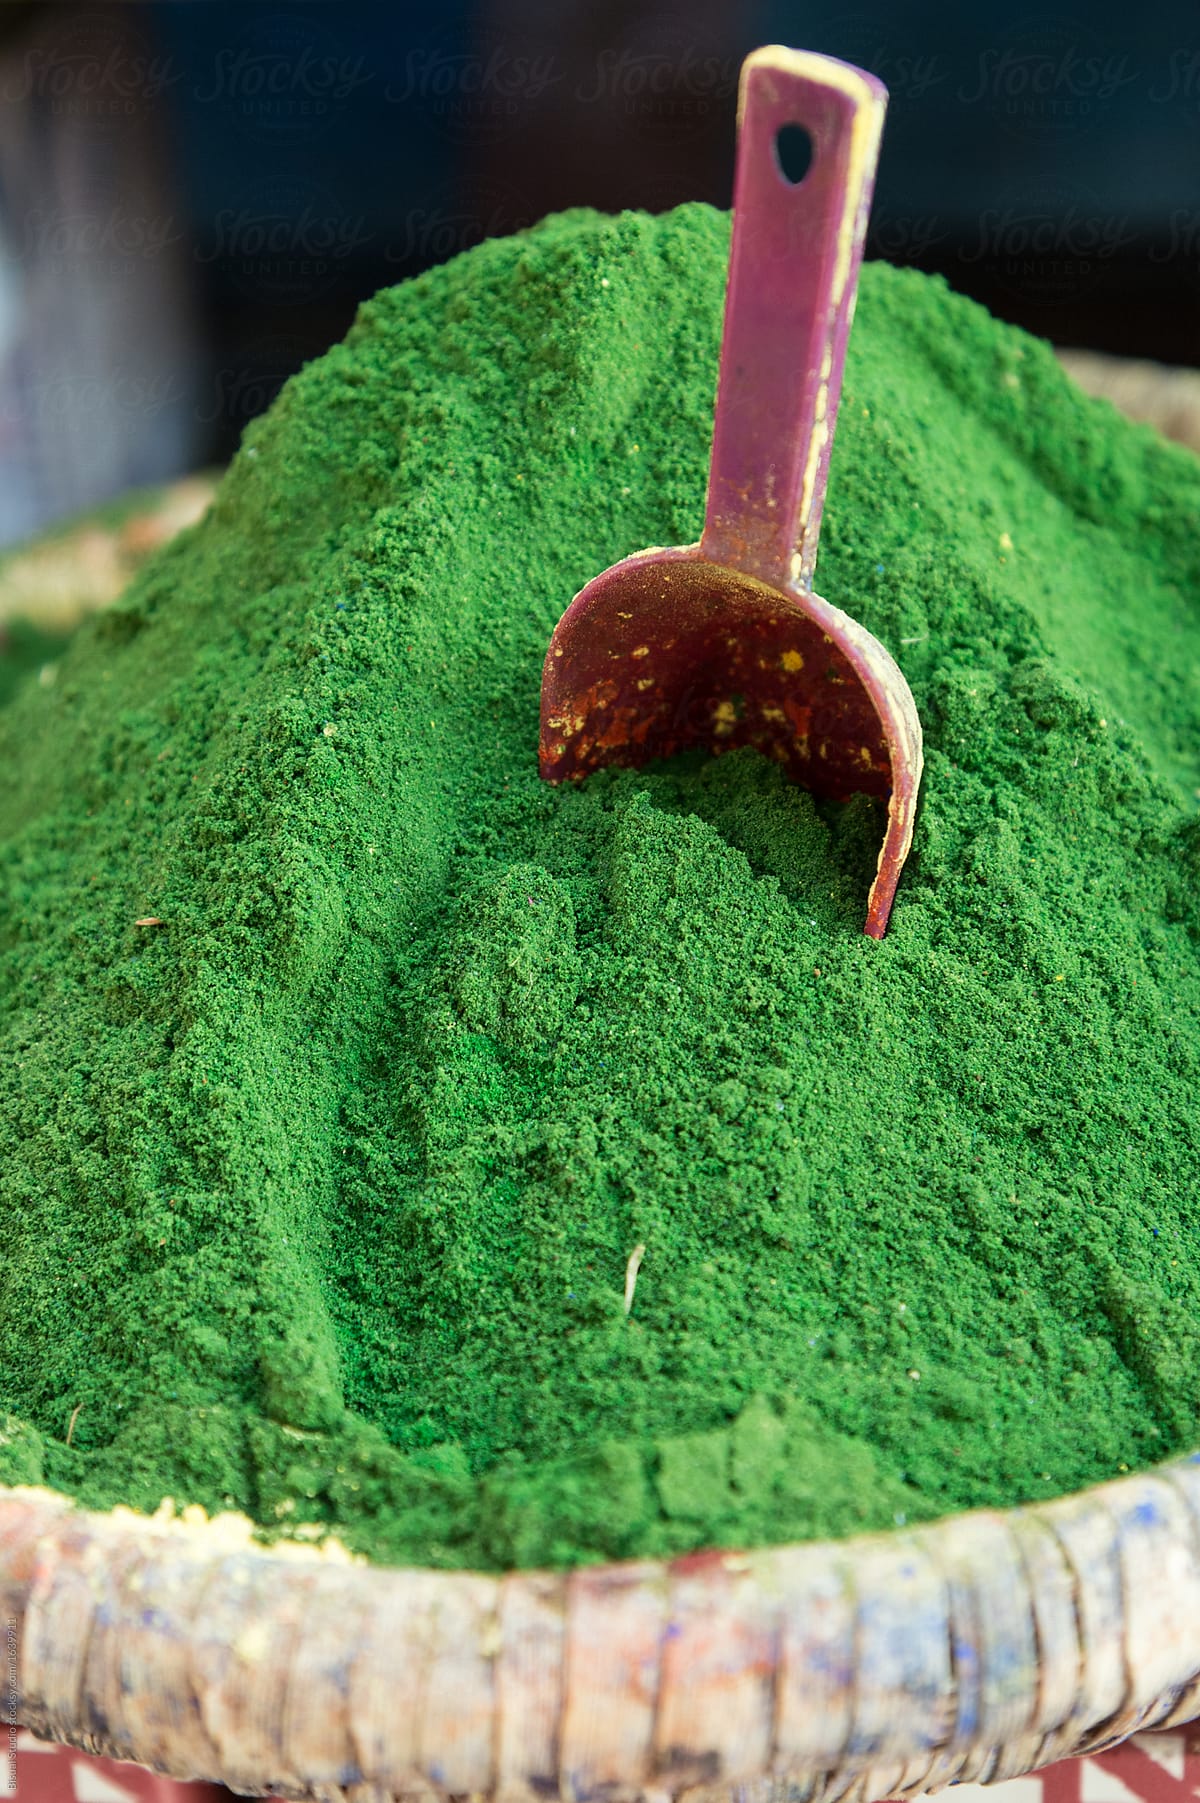 Green powder for sale in a souk market, Marrakech